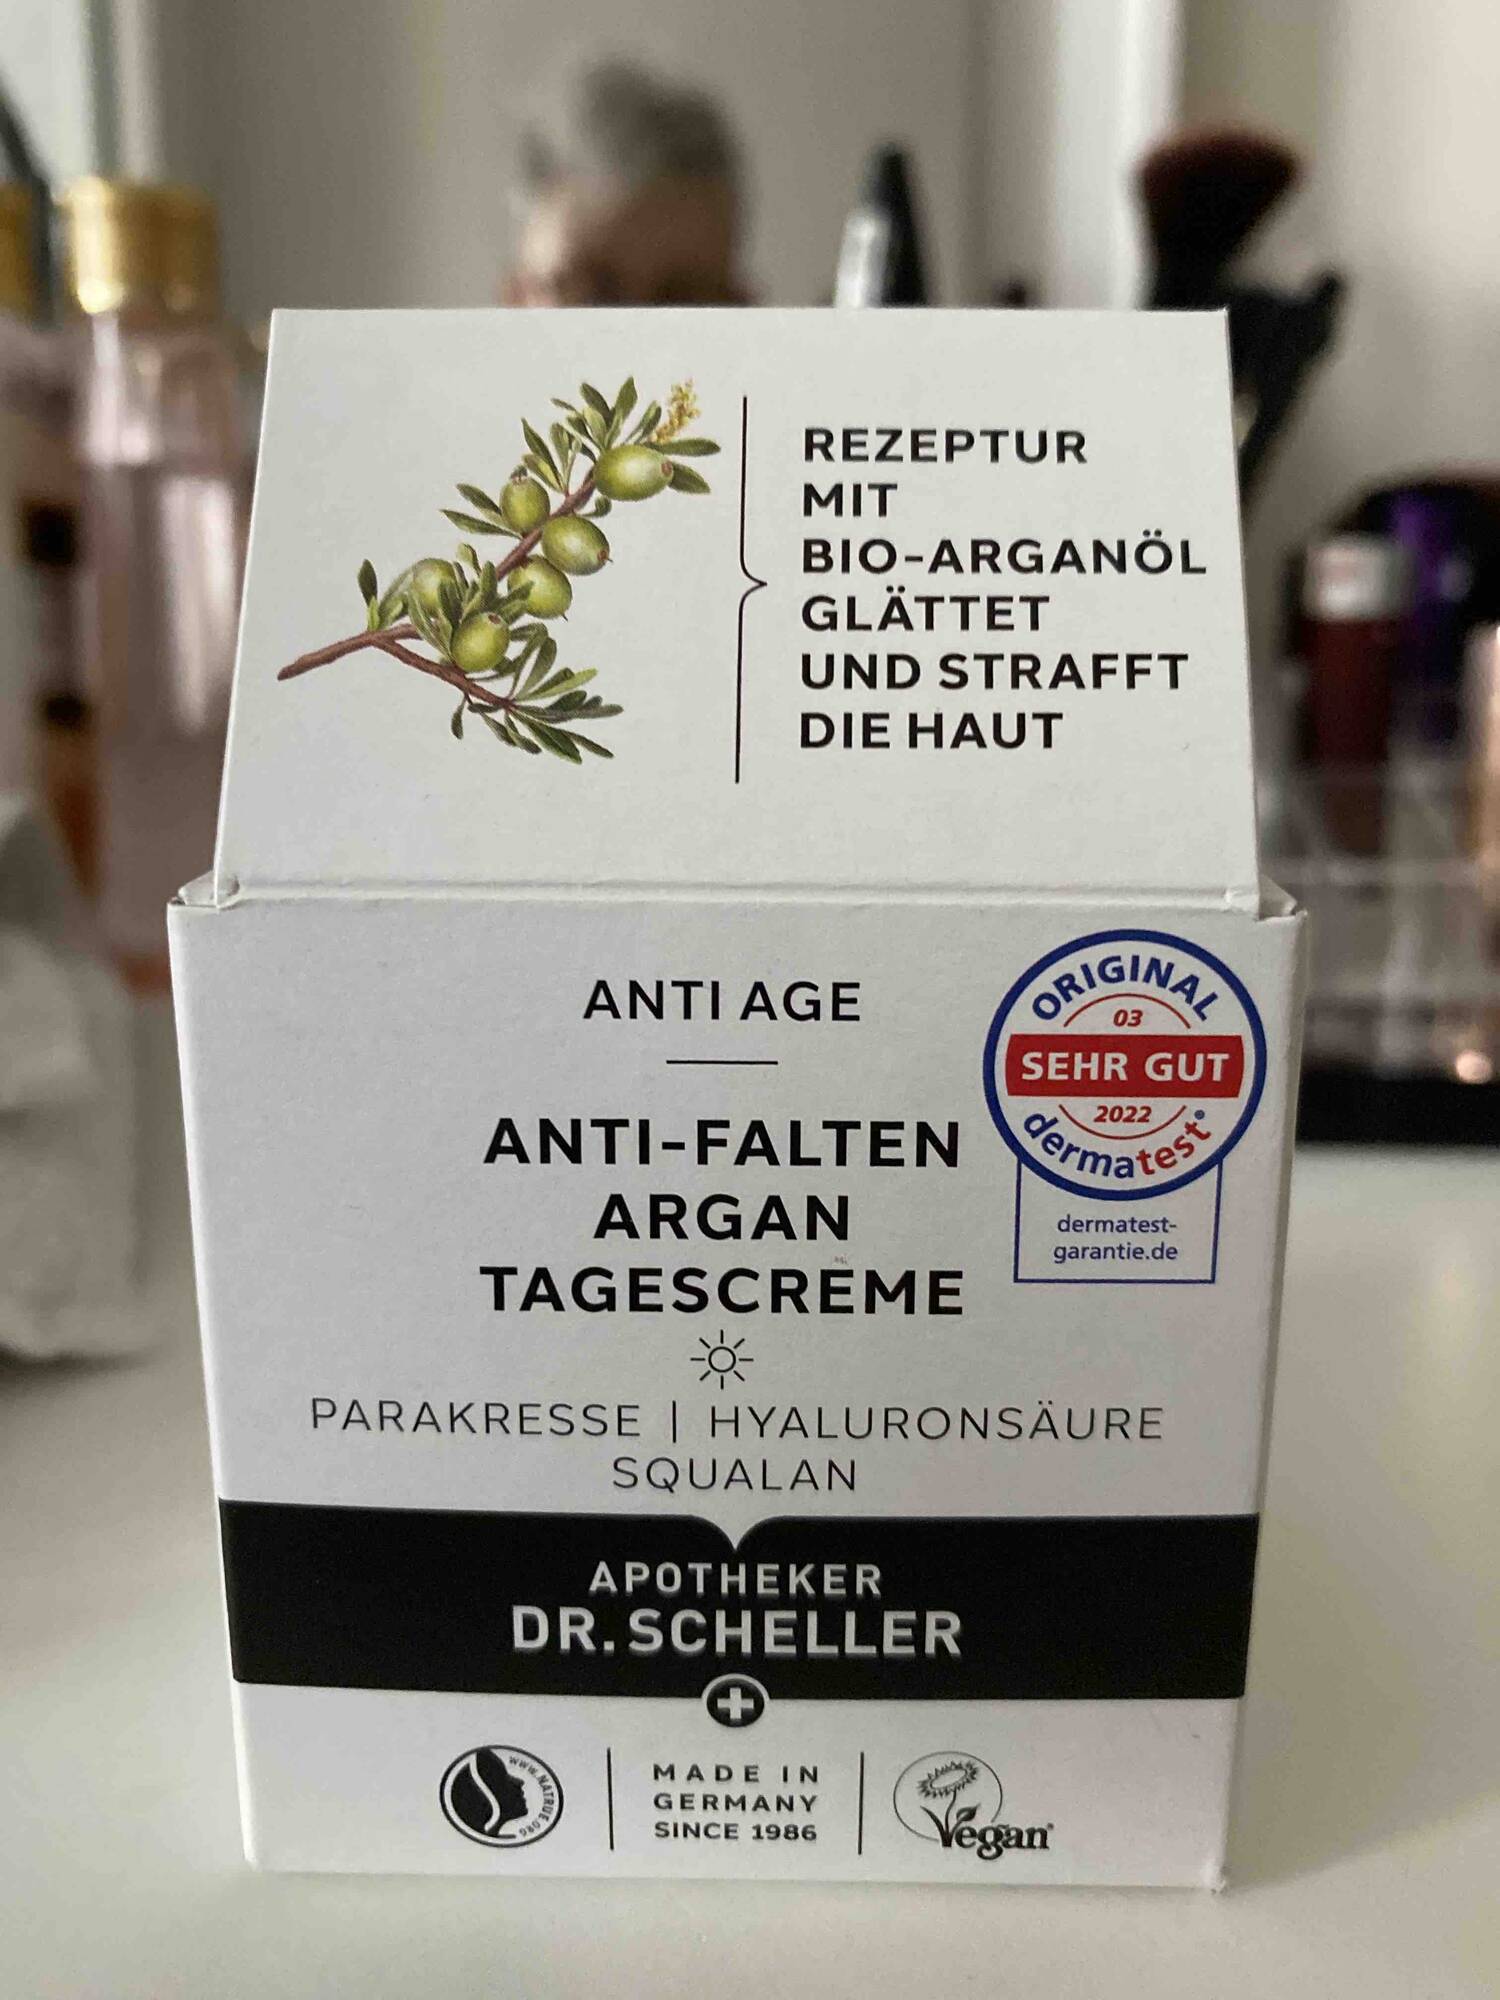 DR. SCHELLER - Anti-falten argan tagescreme 